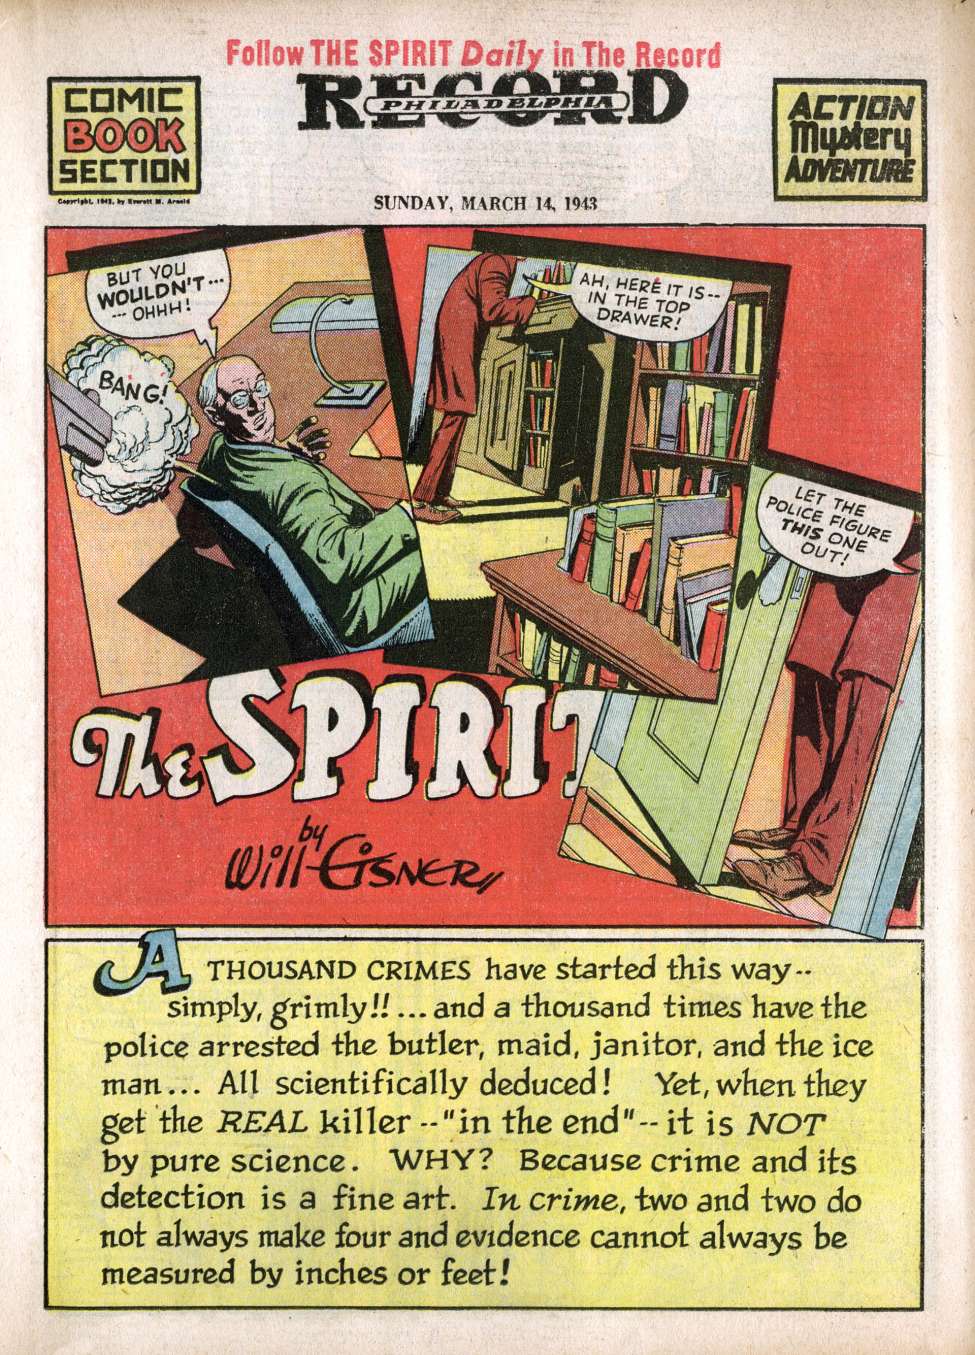 Comic Book Cover For The Spirit (1943-03-14) - Philadelphia Record